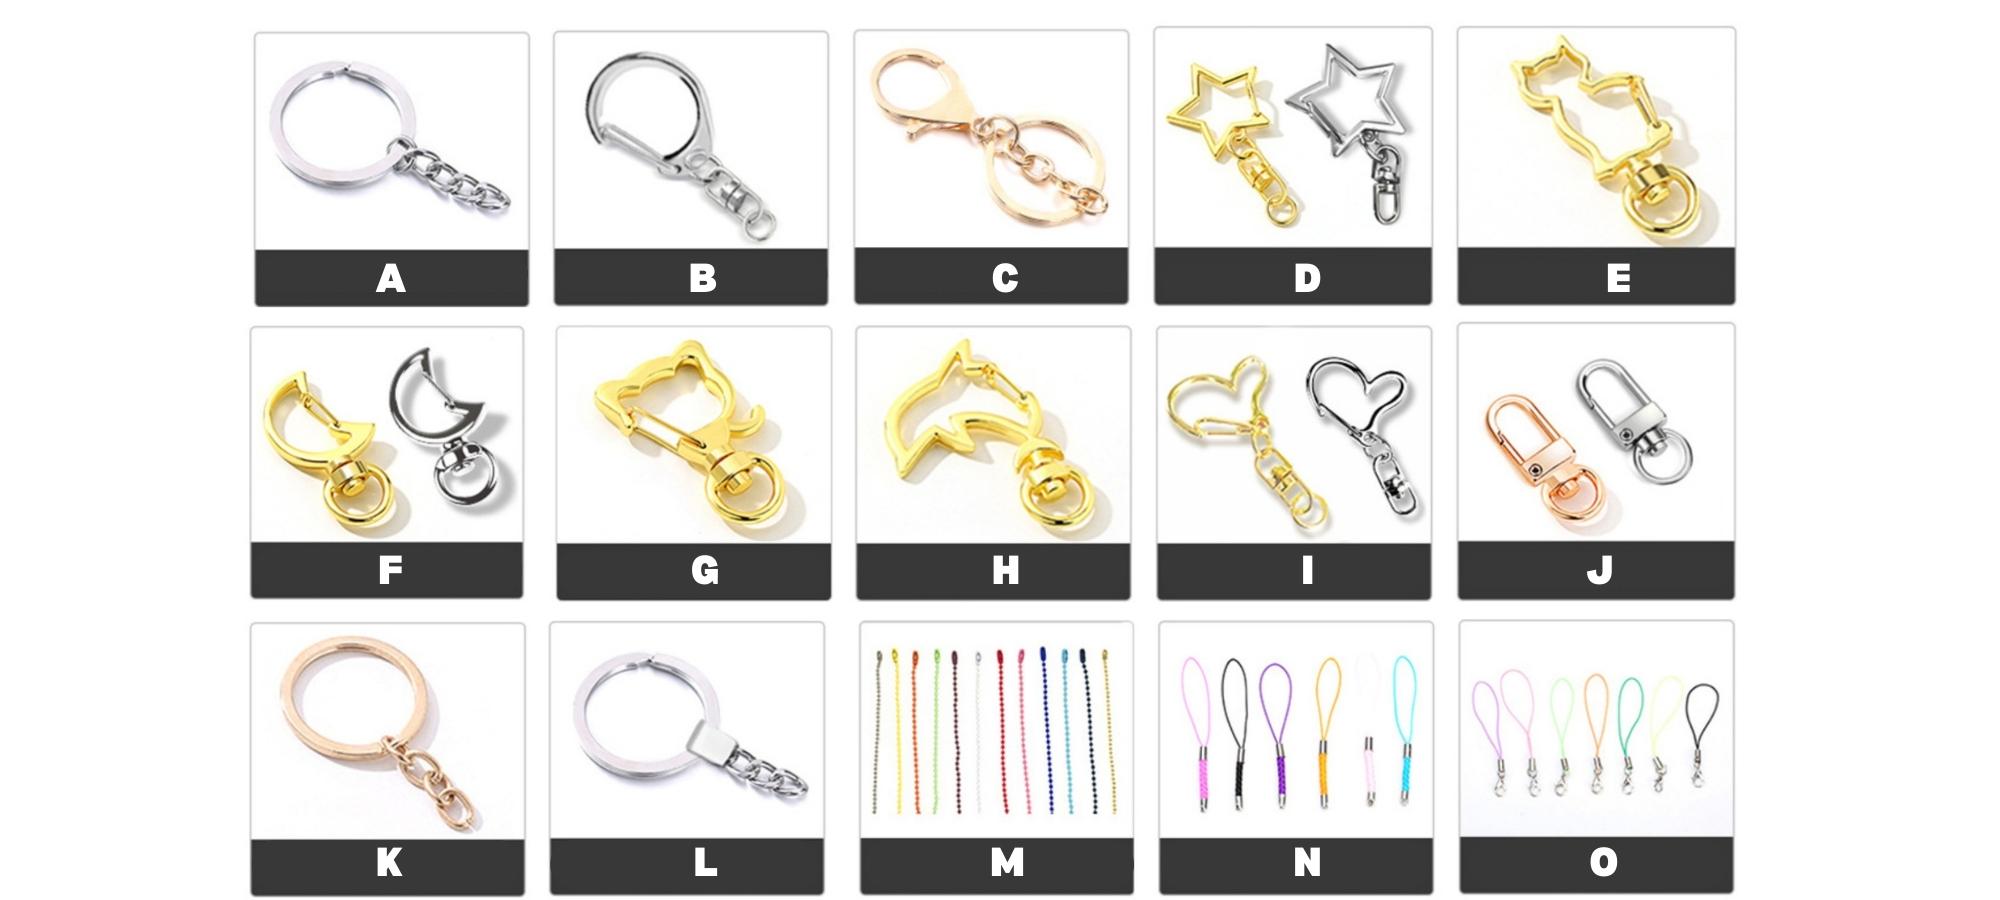 Cheap Wholesale Custom Design Shaker Acrylic Charm Keychain - China  Promotional Gift and Keychain price